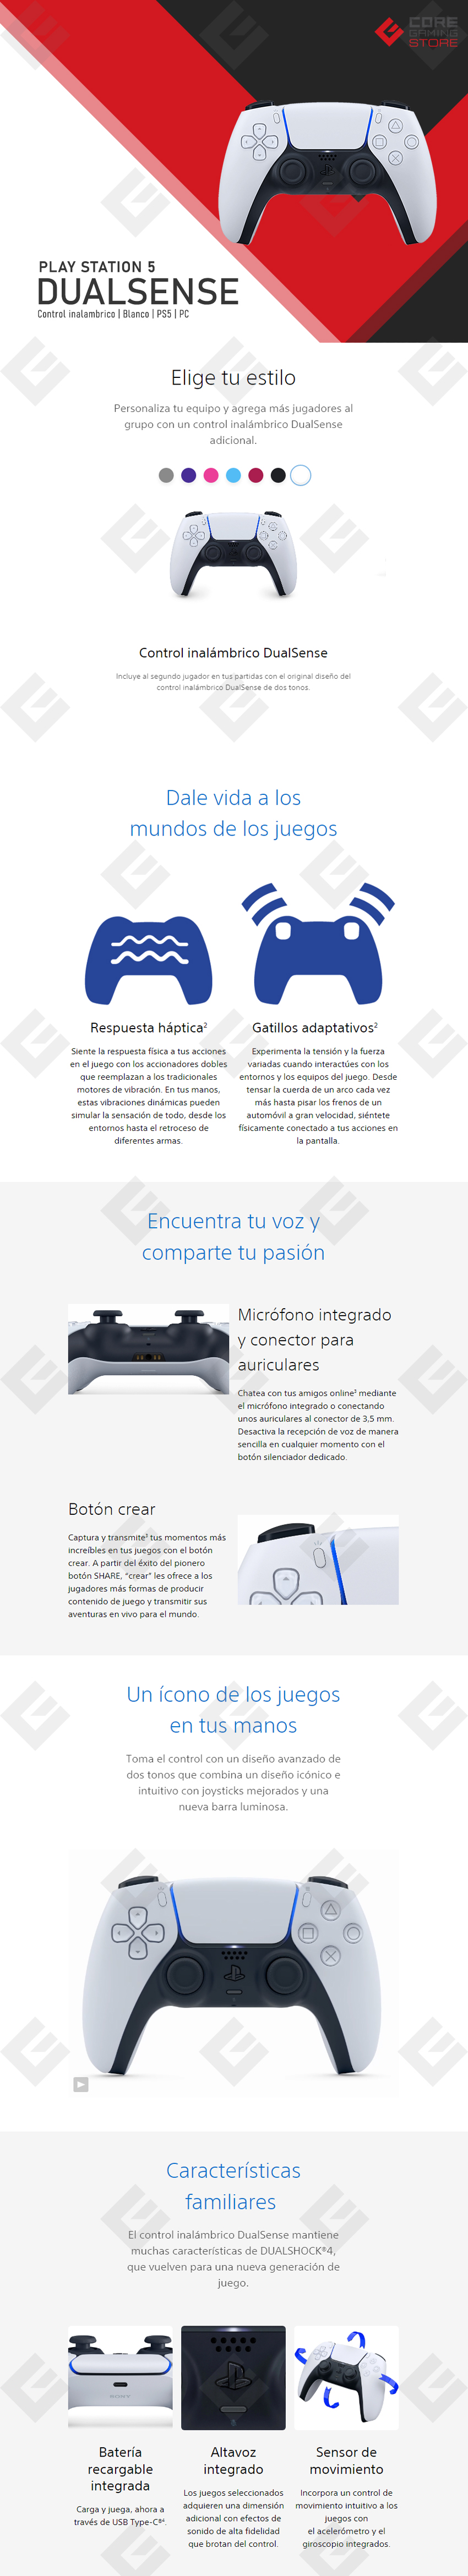 Control Inalámbrico DualSense Blanco | Play Station 5 | PS5